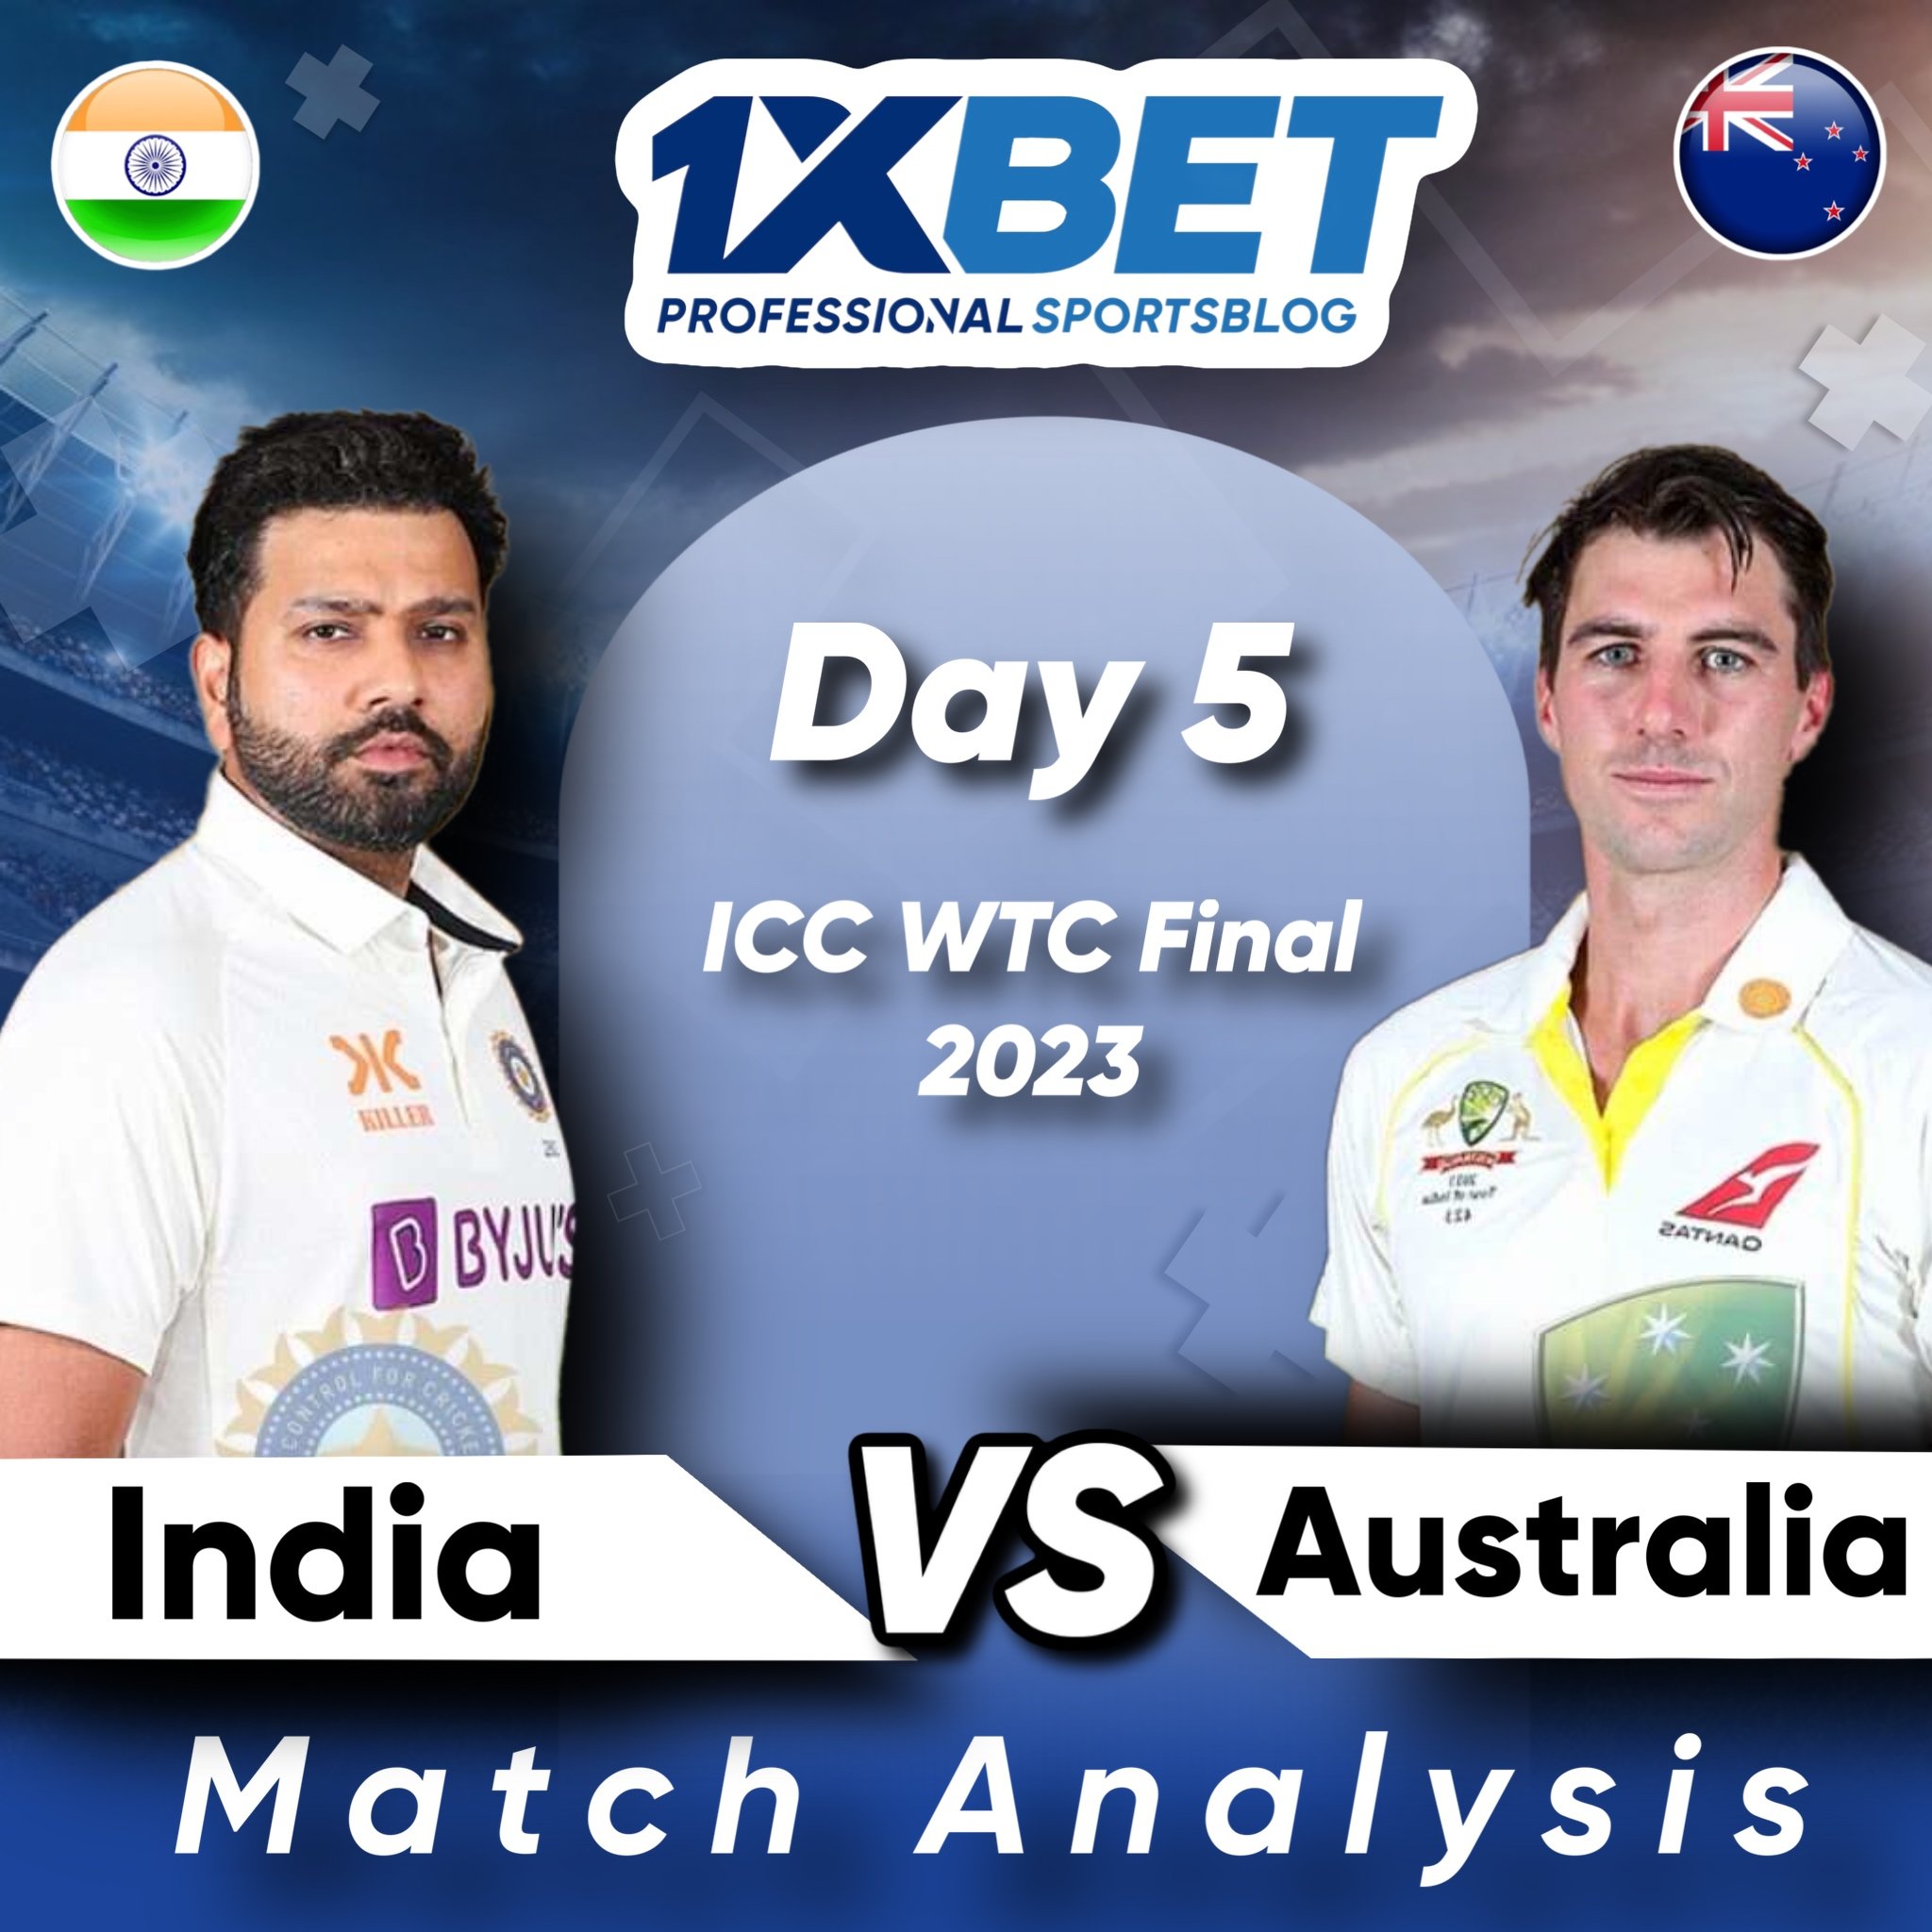 Australia vs India, Day 5, ICC WTC Final 2023 Match Analysis